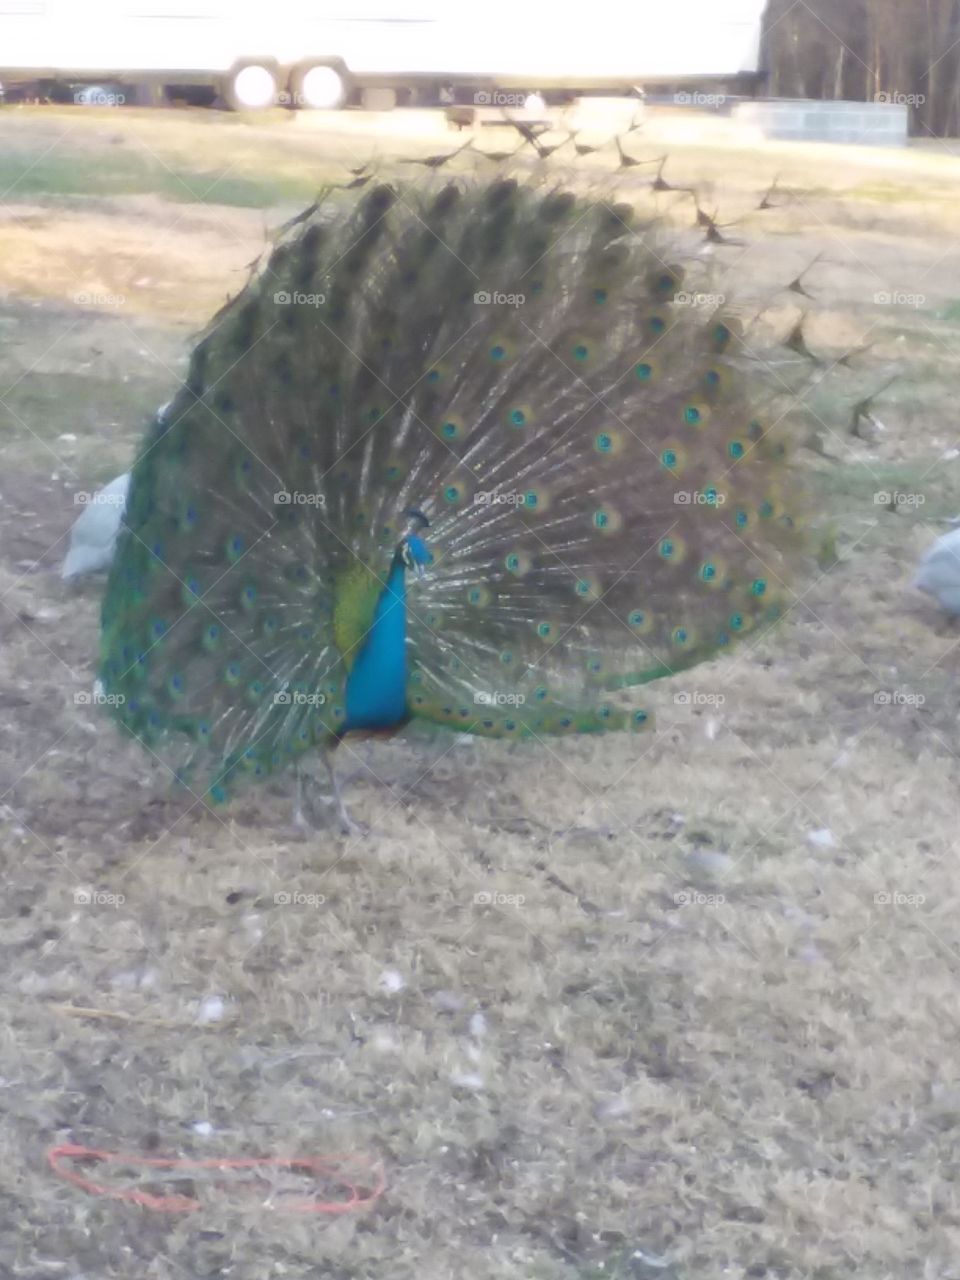 Showy peacock